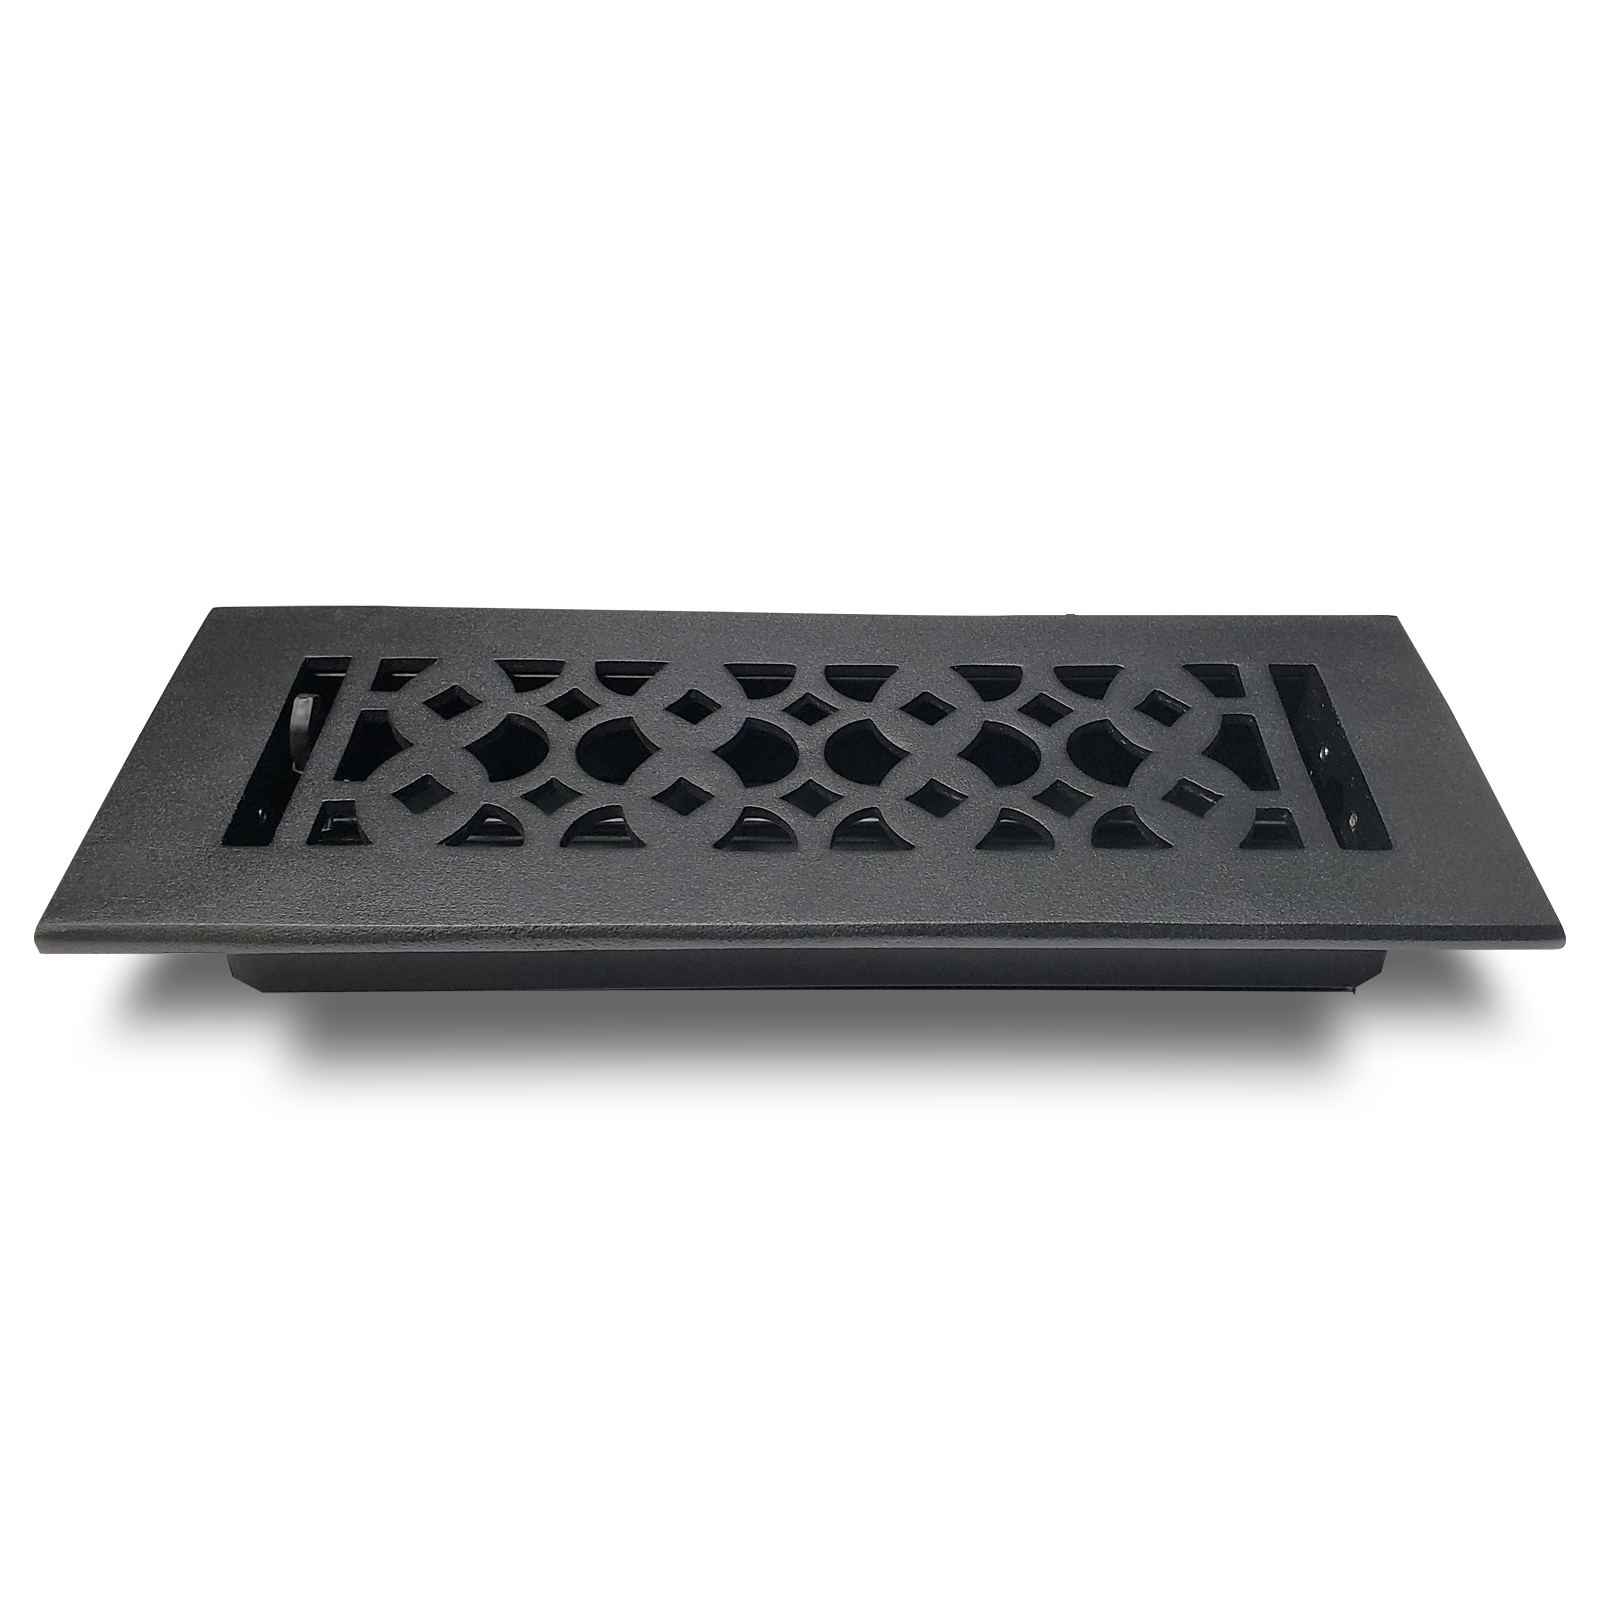 10″x 10″ Heavy Duty Solid Cast Aluminum Floor Register Vent Cover with Detachable Steel Metal Damper